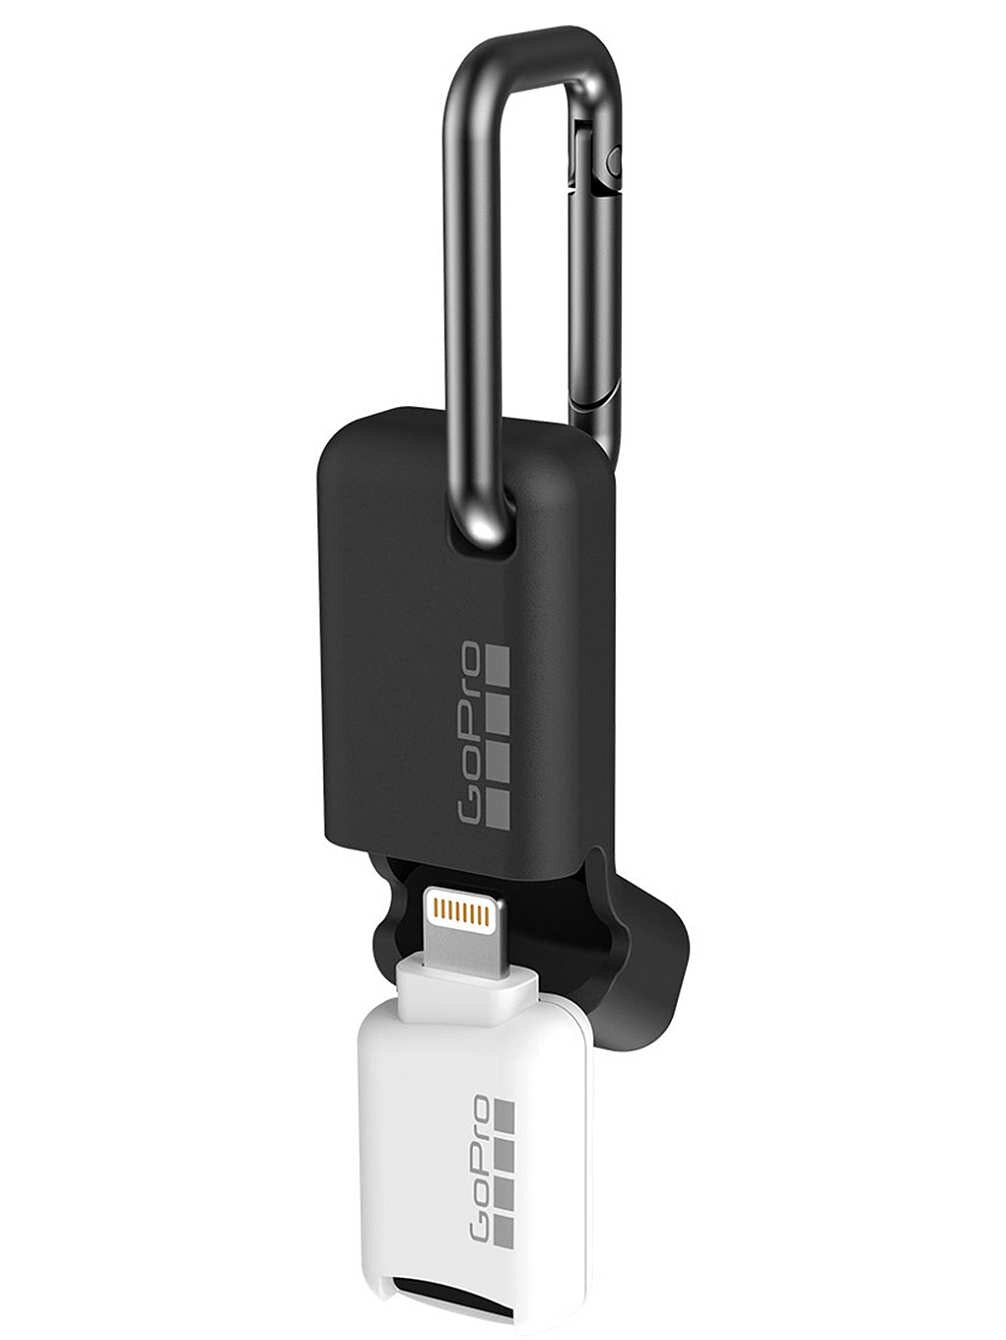 GoPro Quik Key (iPhone/iPad) Mobile microSD Card Reader